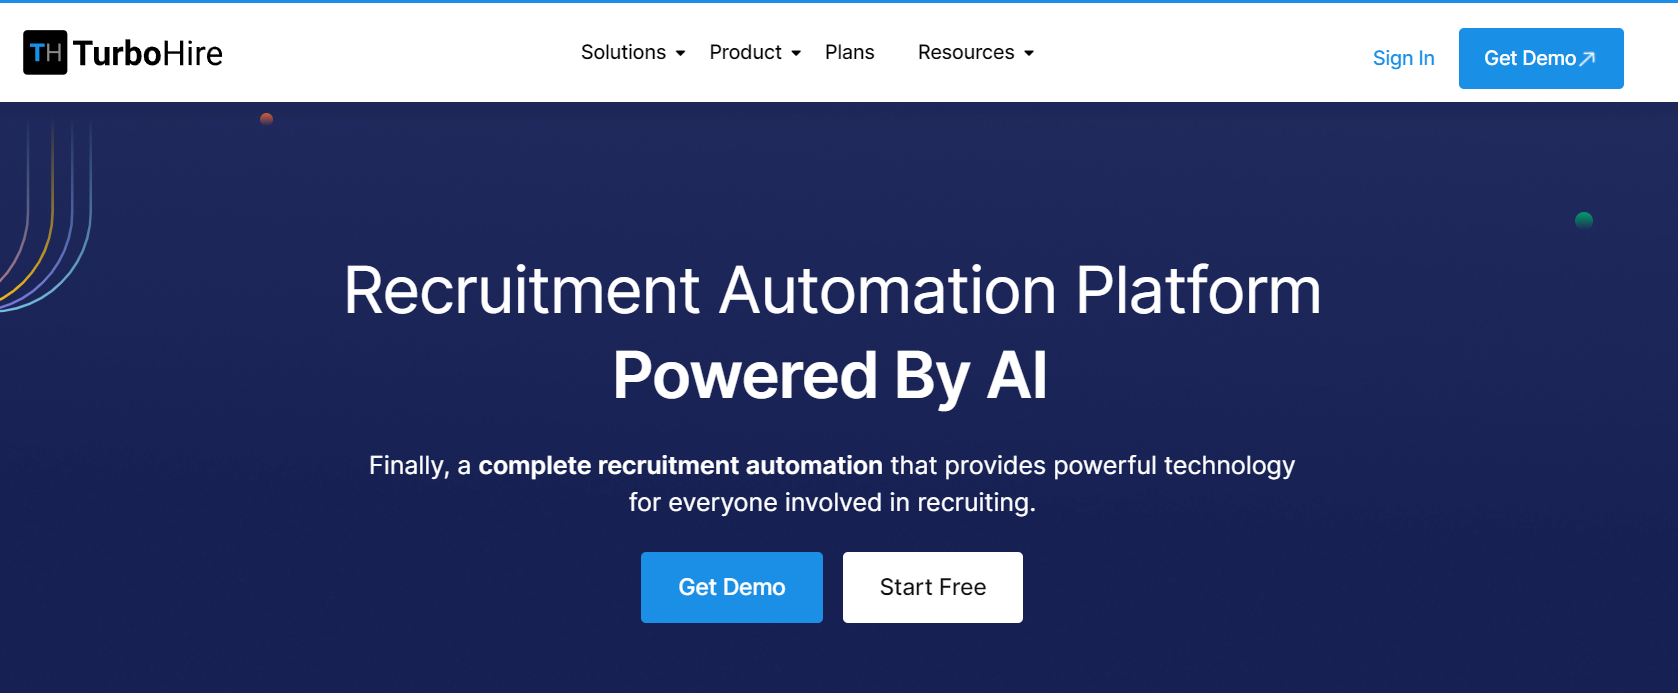 TurboHire's website for a recruitment automation platform